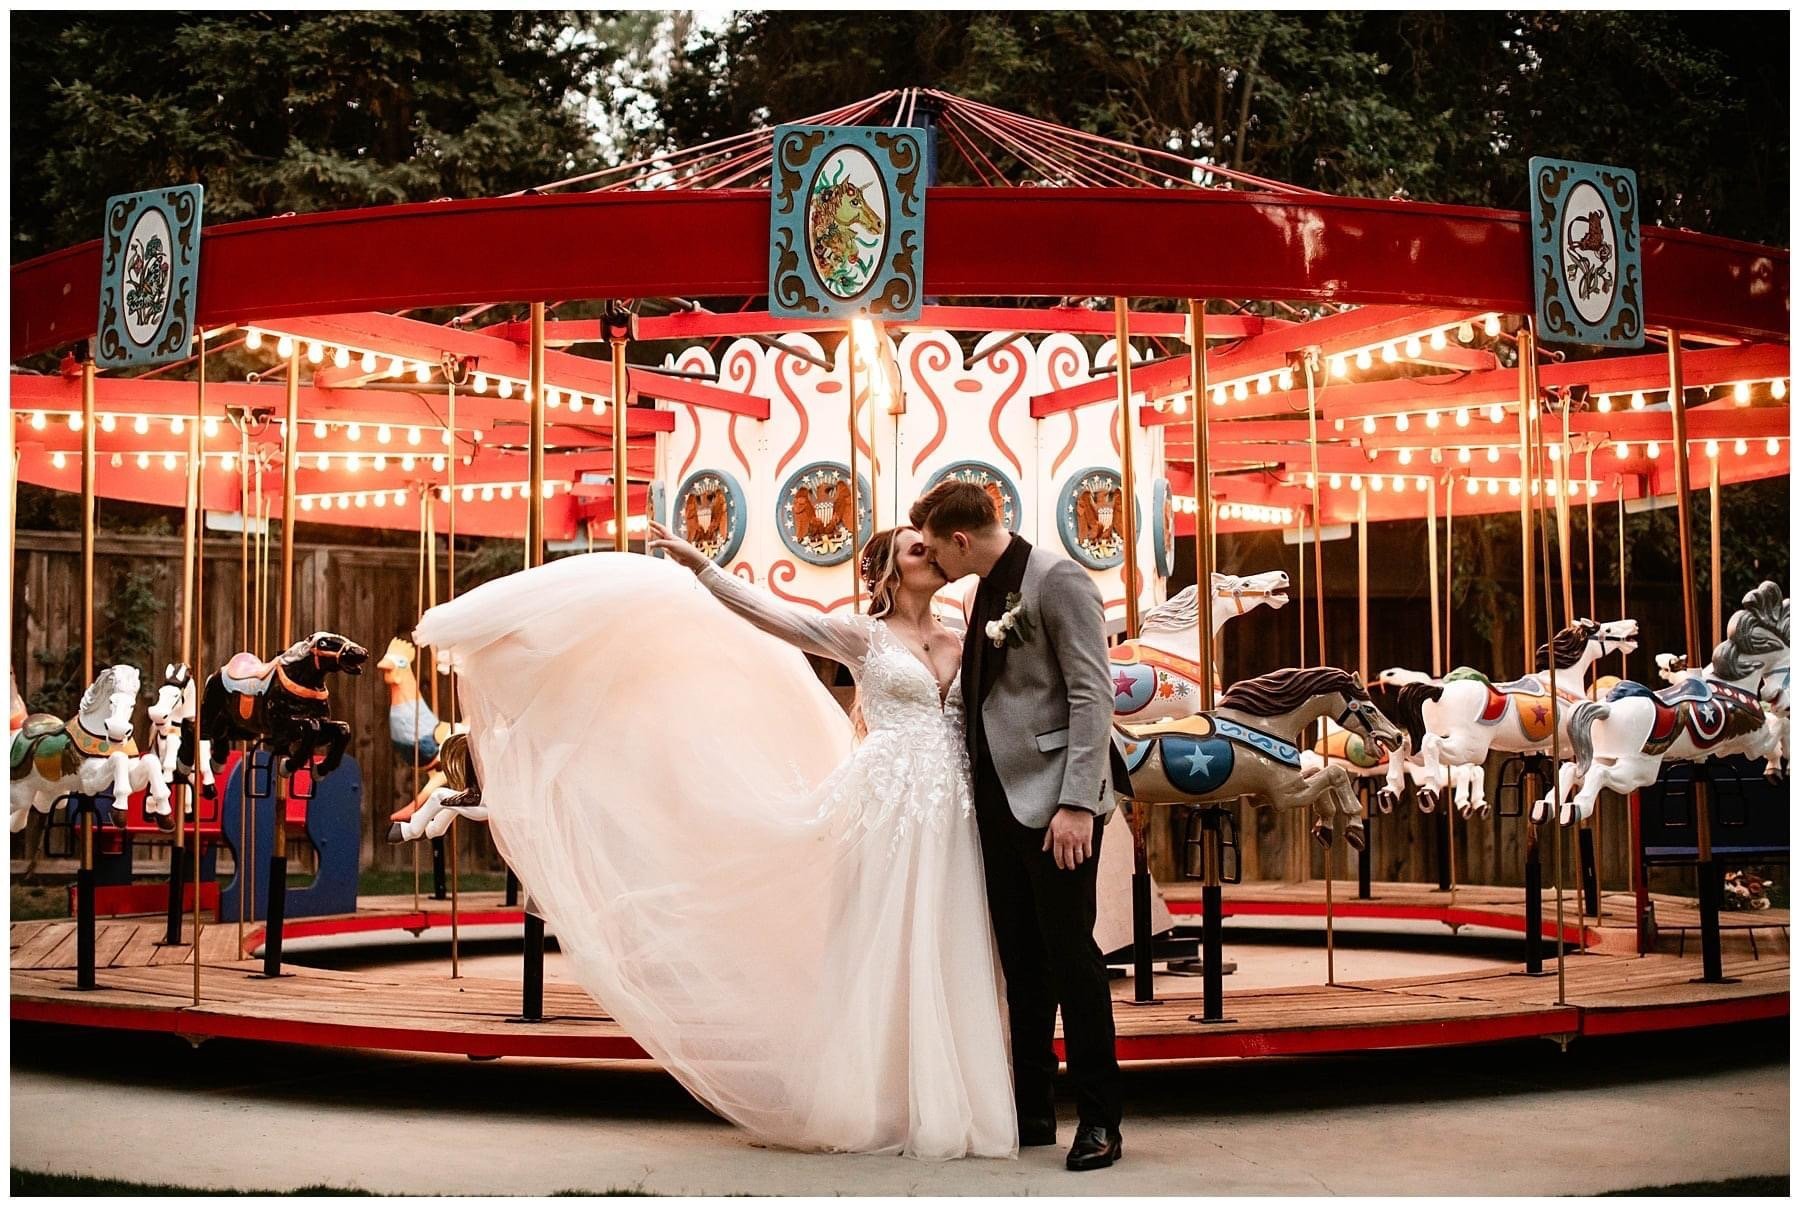 www.santabarbarawedding.com | Events by Fran | Gabrielle von Heyking | Calamigos Ranch | Anomalie | Essense of Australia | Stephanie Mankey | Jackie Romero | Nordstrom | Couple in Front of Carousel